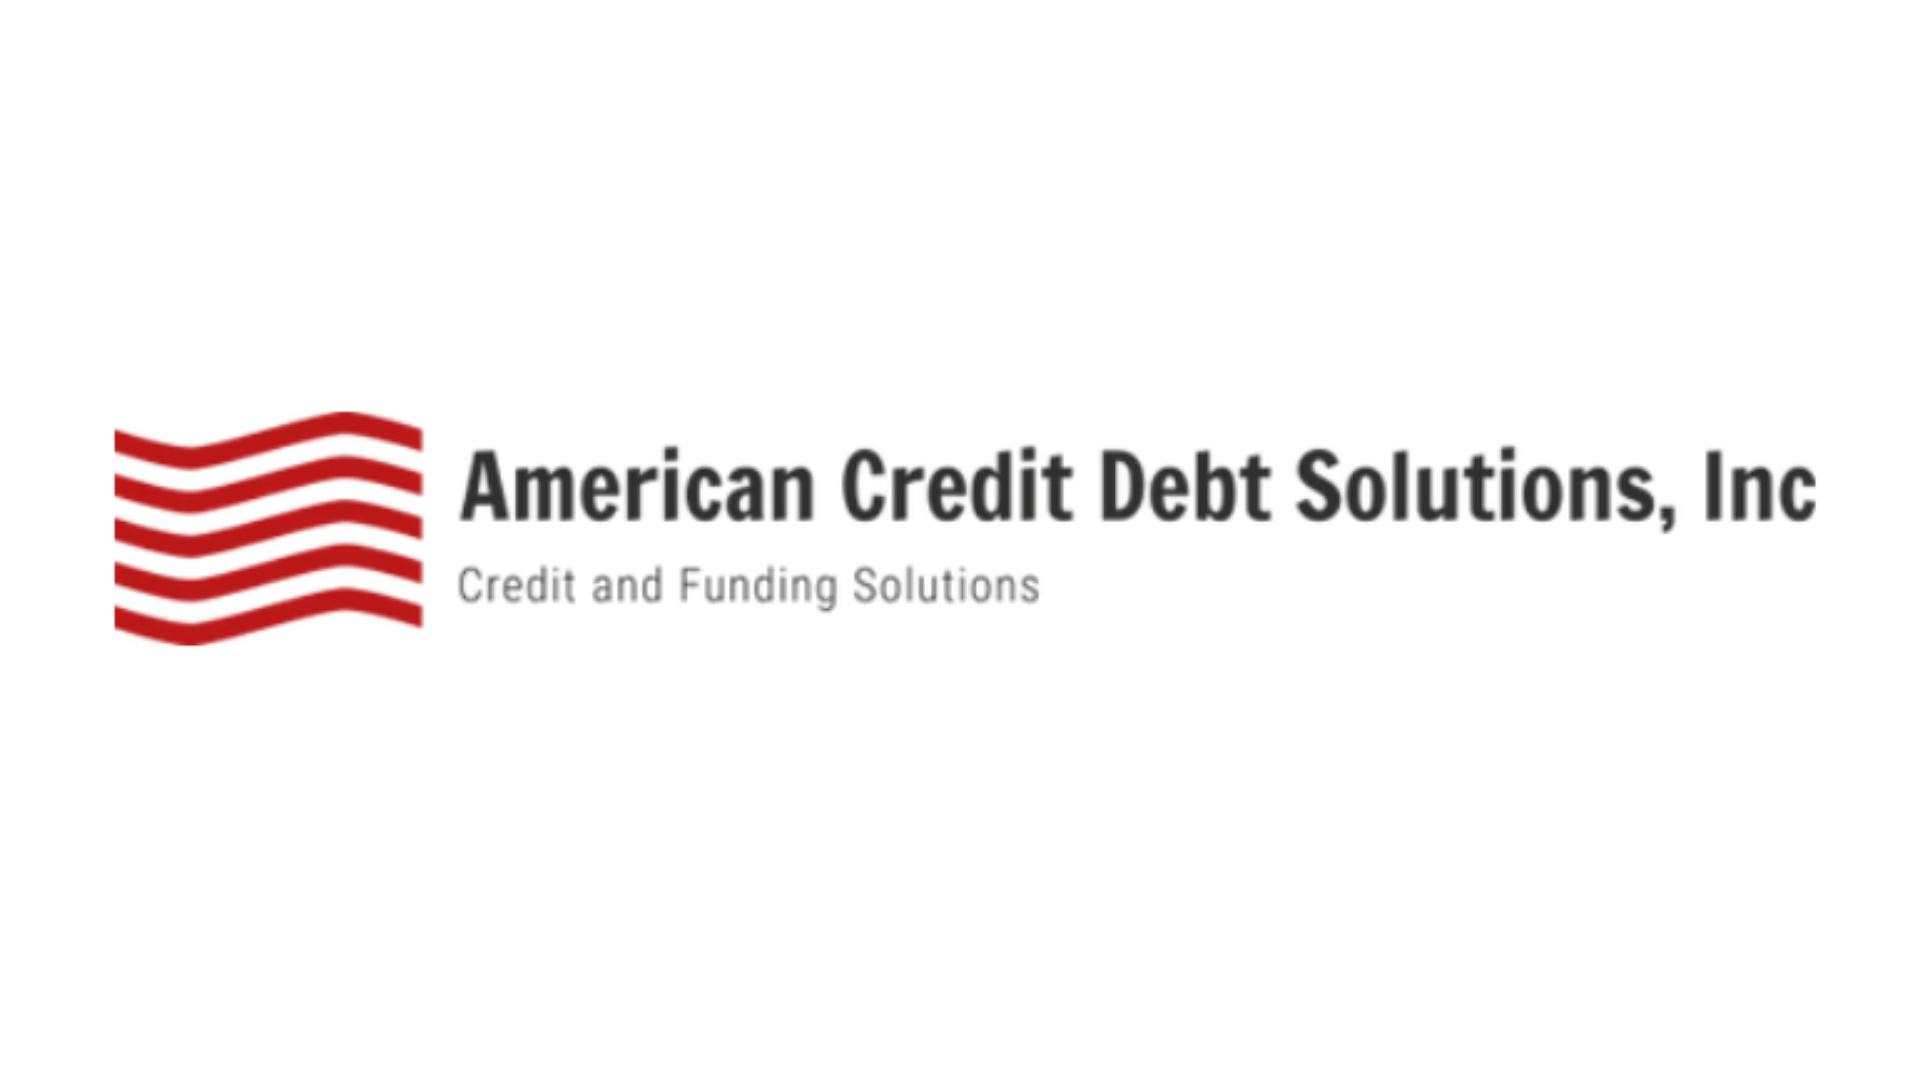 American Credit Debt Solutions